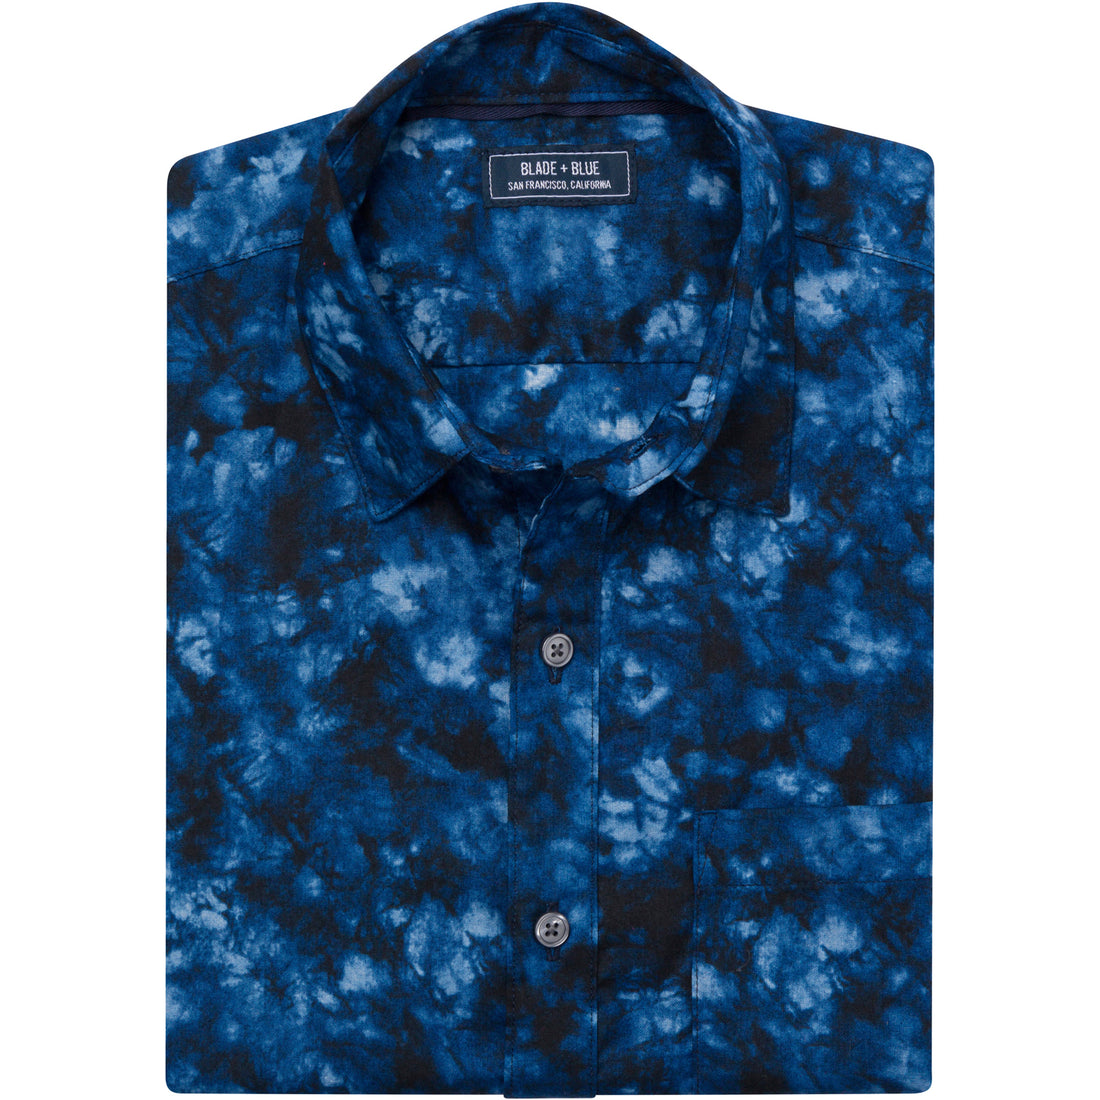 SMOKEY Short Sleeve Shirt in Indigo Blue Marbled Print